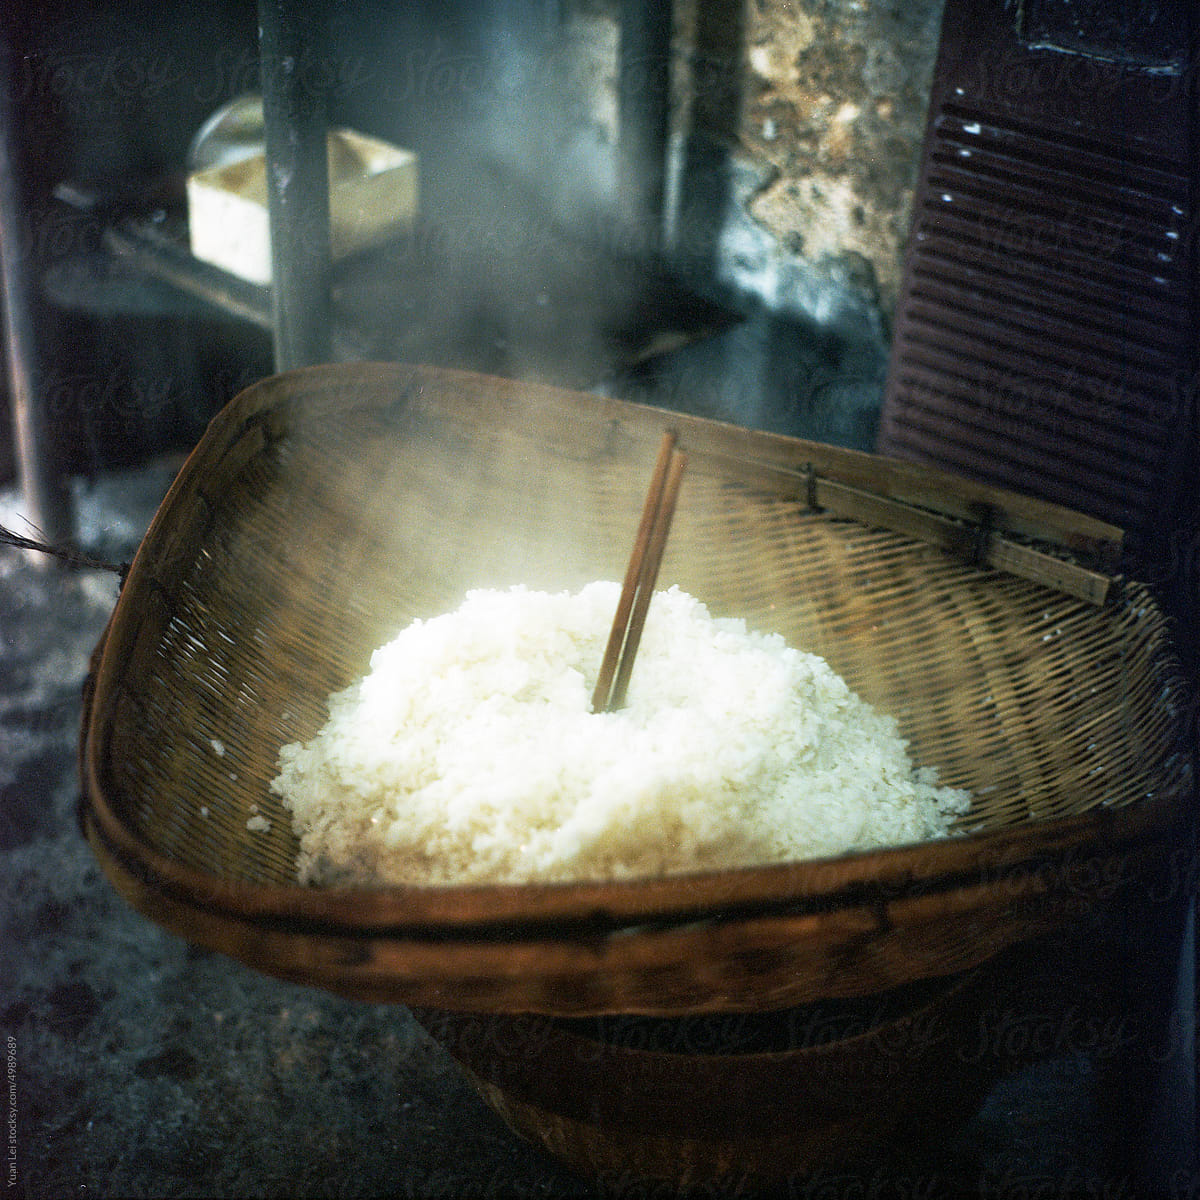 Hot Rice in Bamboo Basket